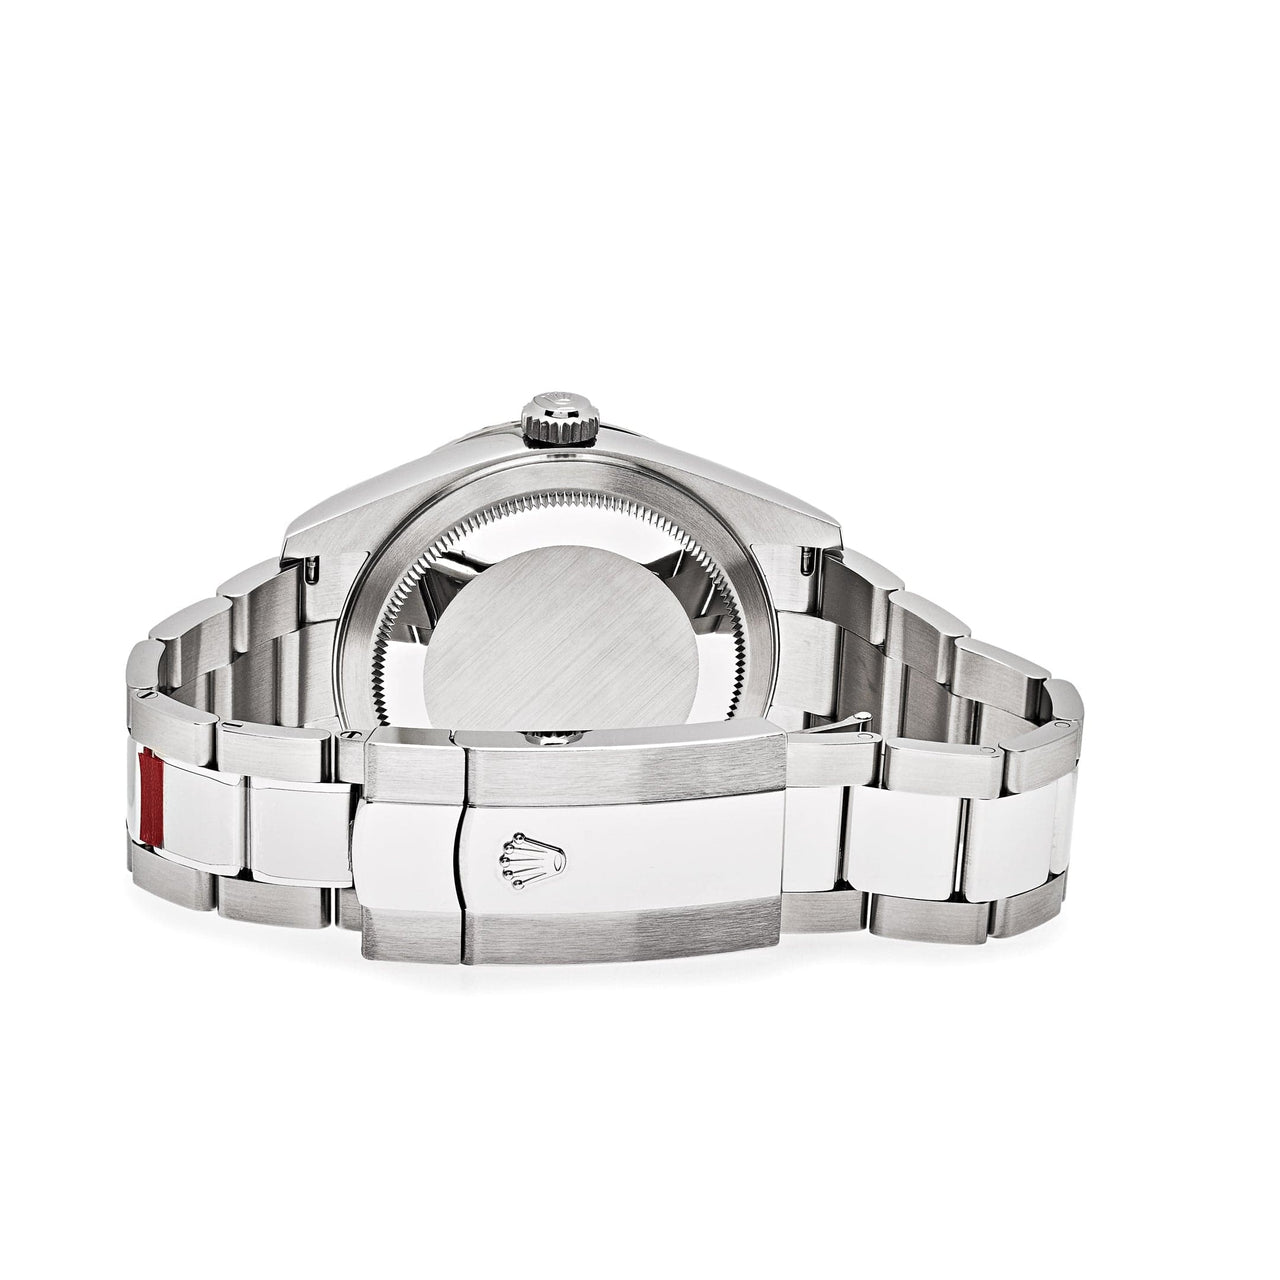 Luxury Watch Rolex Sky-Dweller 42mm Stainless Steel Blue Dial 326934 Wrist Aficionado